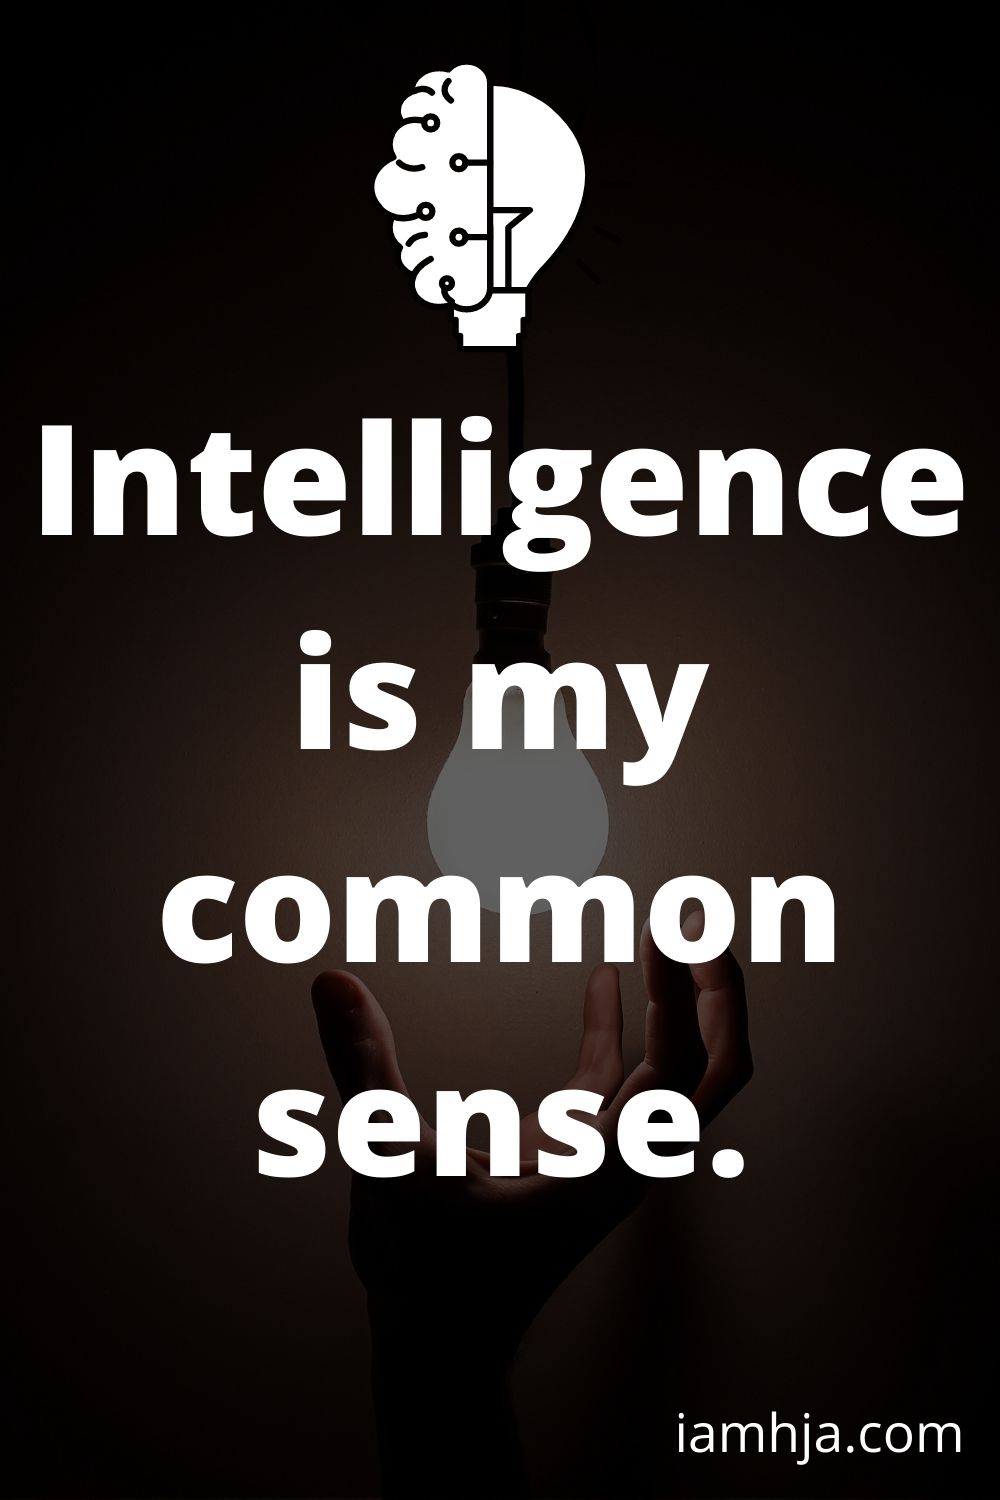 Intelligence is my common sense